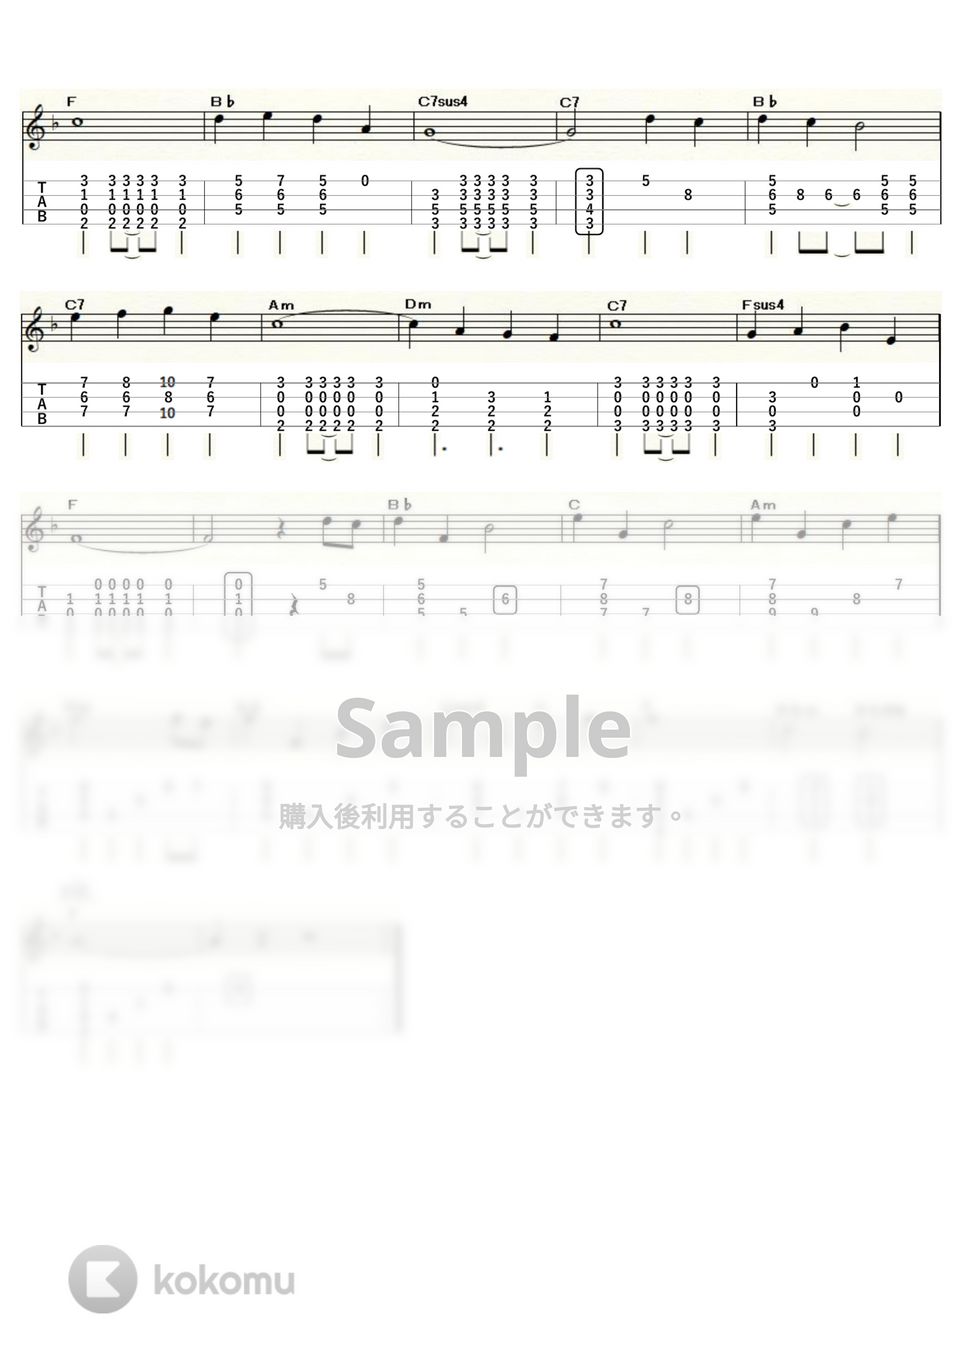 ZACAR - 哀しみのソレアード (ｳｸﾚﾚｿﾛ / High-G・Low-G / 初級～中級) by ukulelepapa